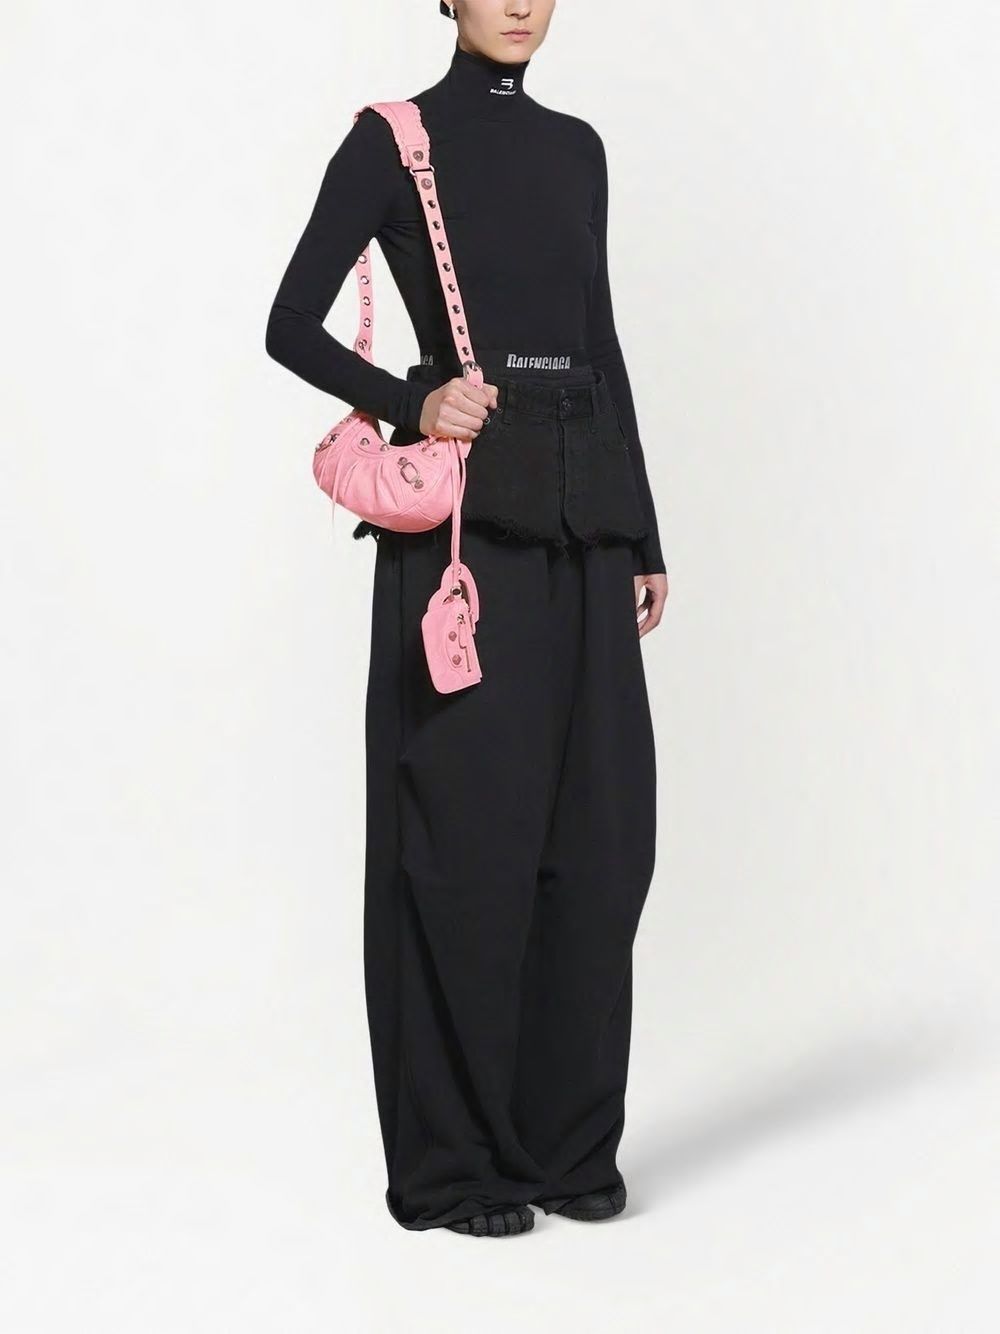 BALENCIAGA Studded Leather Crossbody Handbag in Pink for Women